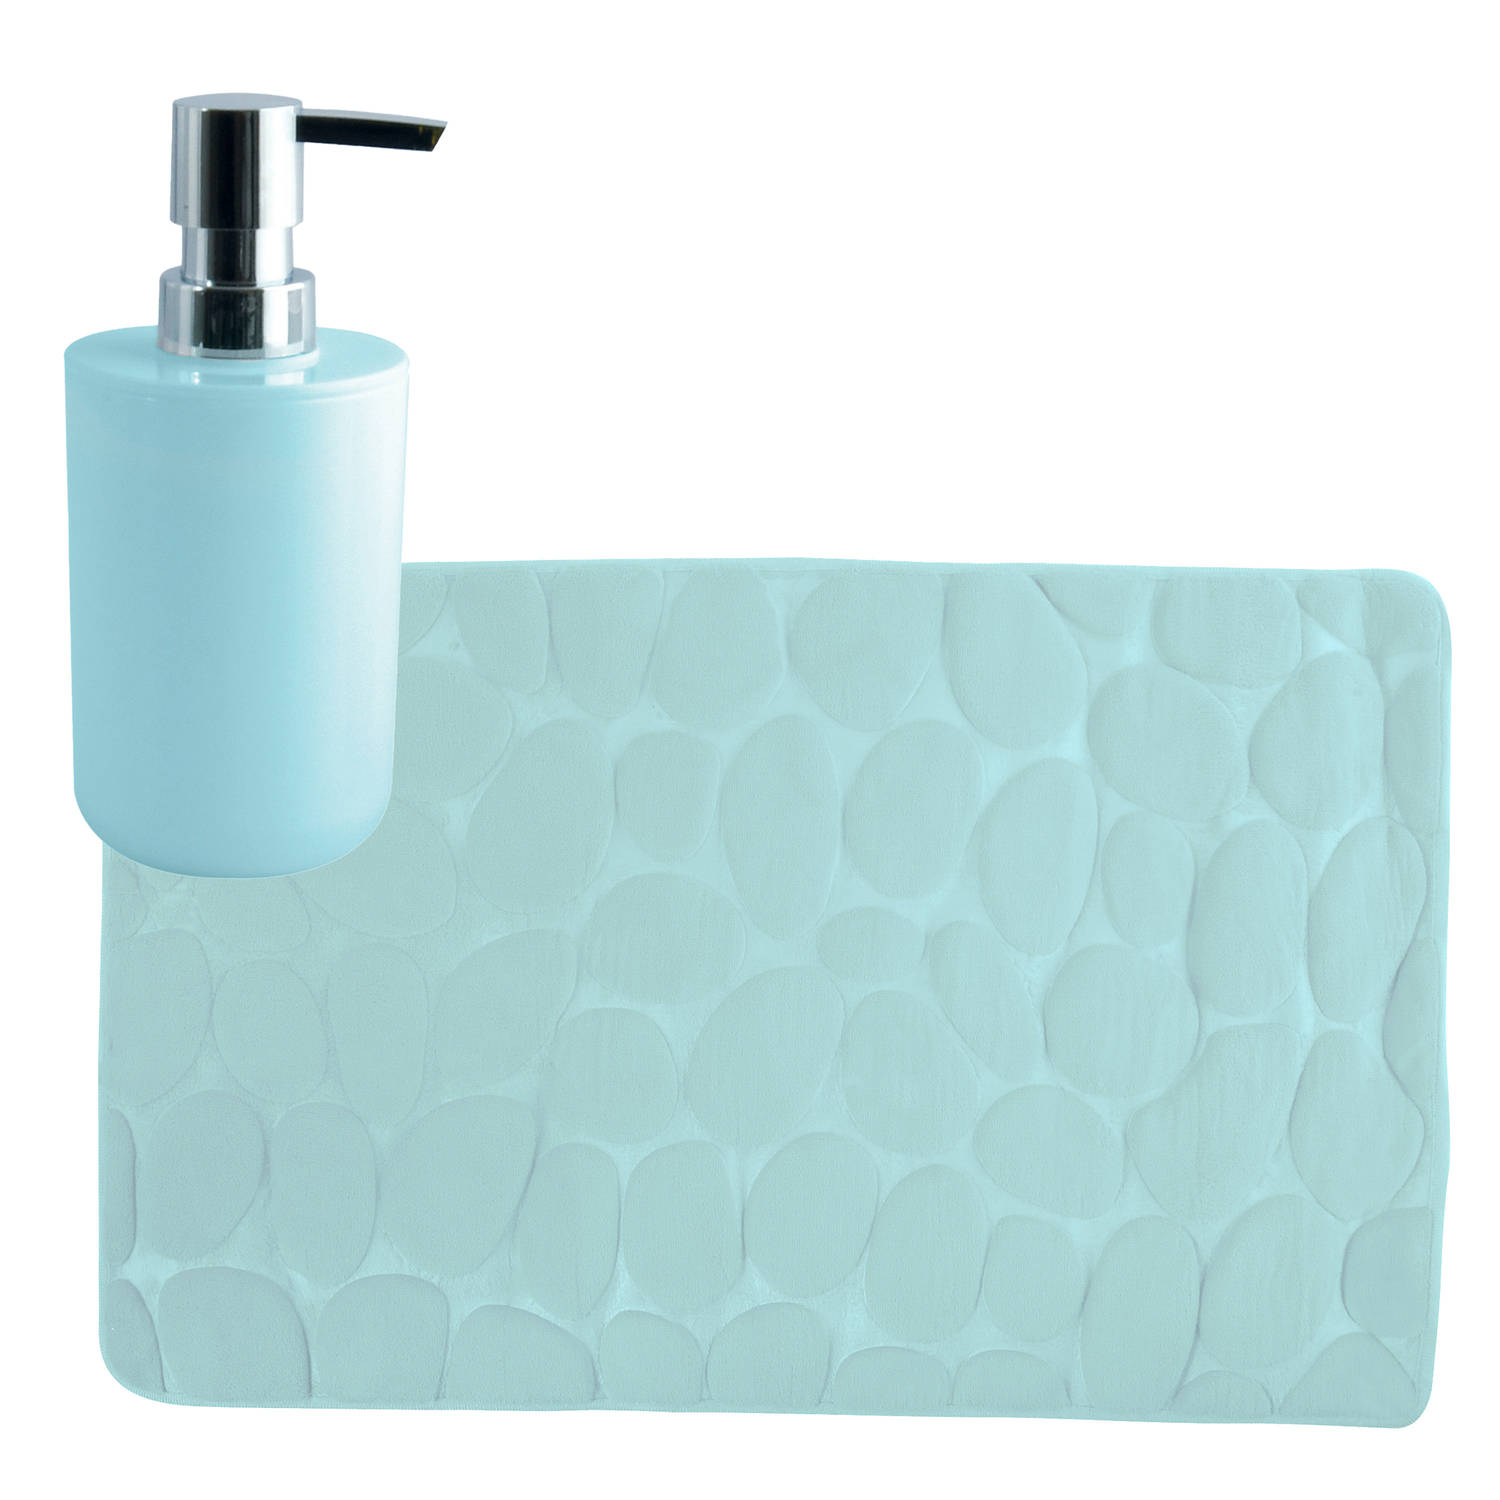 MSV badkamer droogloop mat-tapijt Kiezel 50 x 80 cm zelfde kleur zeeppompje mintgroen Badmatjes